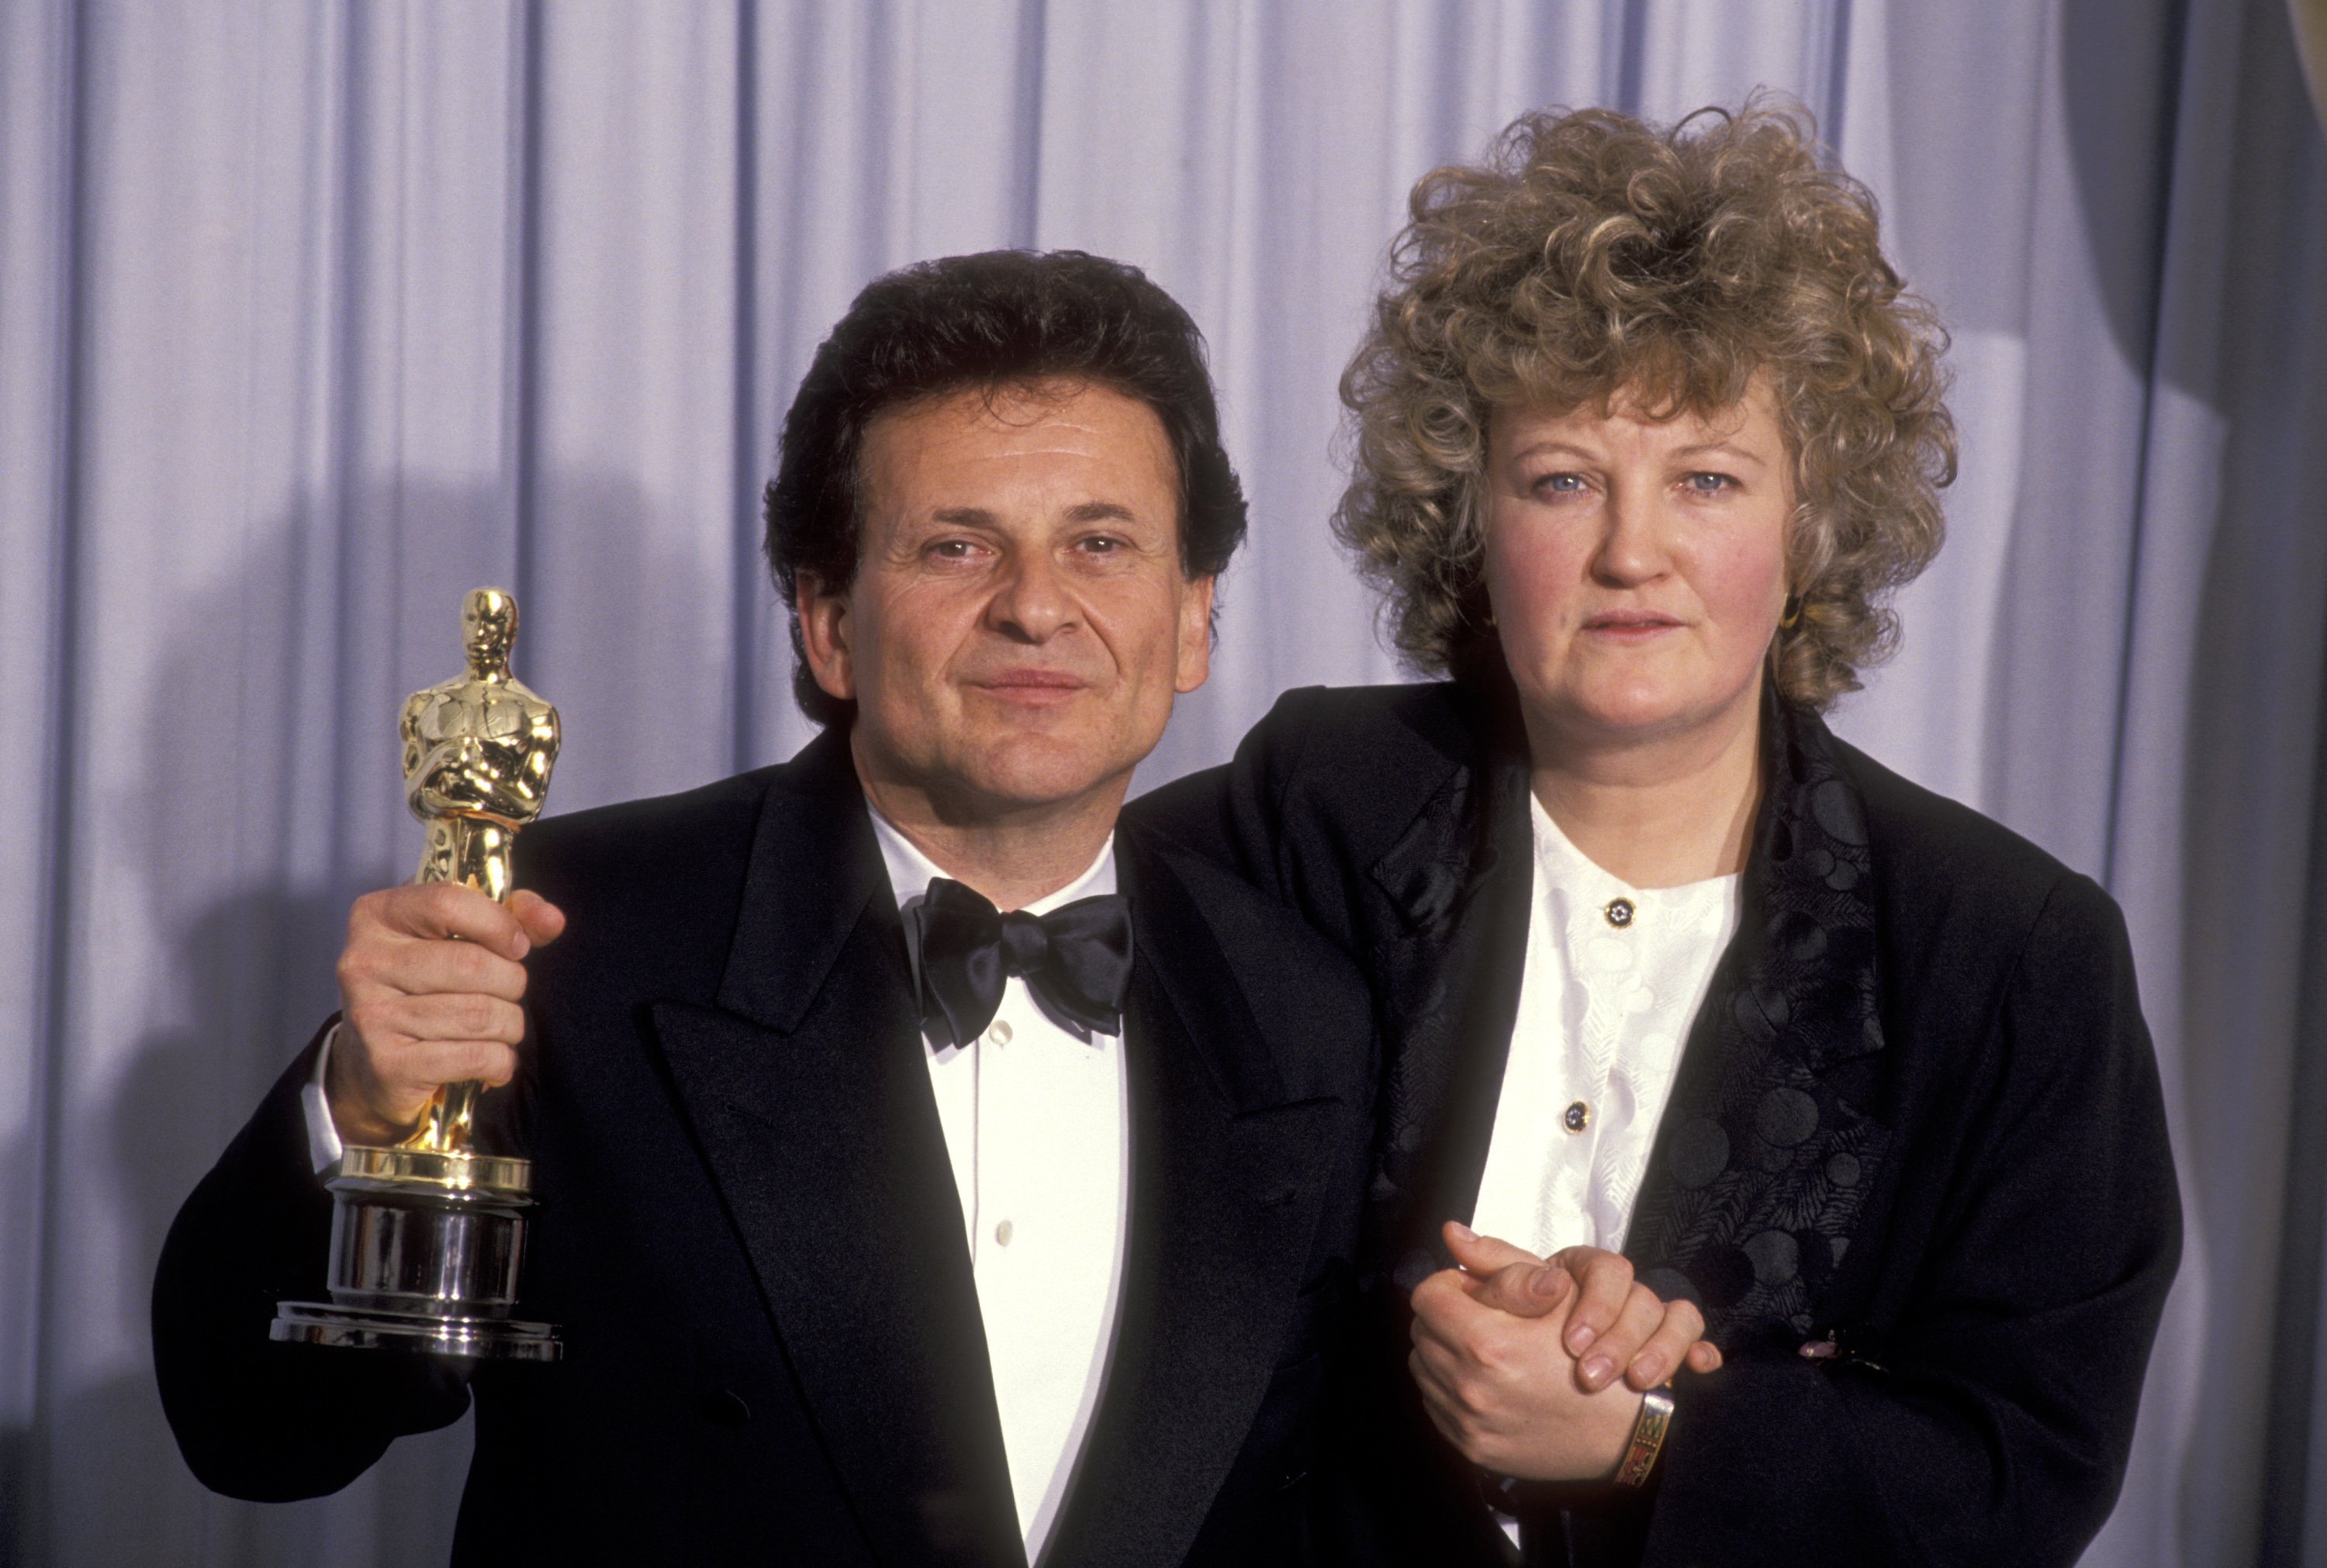 Joe Pesci and Branda Fricker are photographed following Joe Pesci's Academy Awards Win in 1991